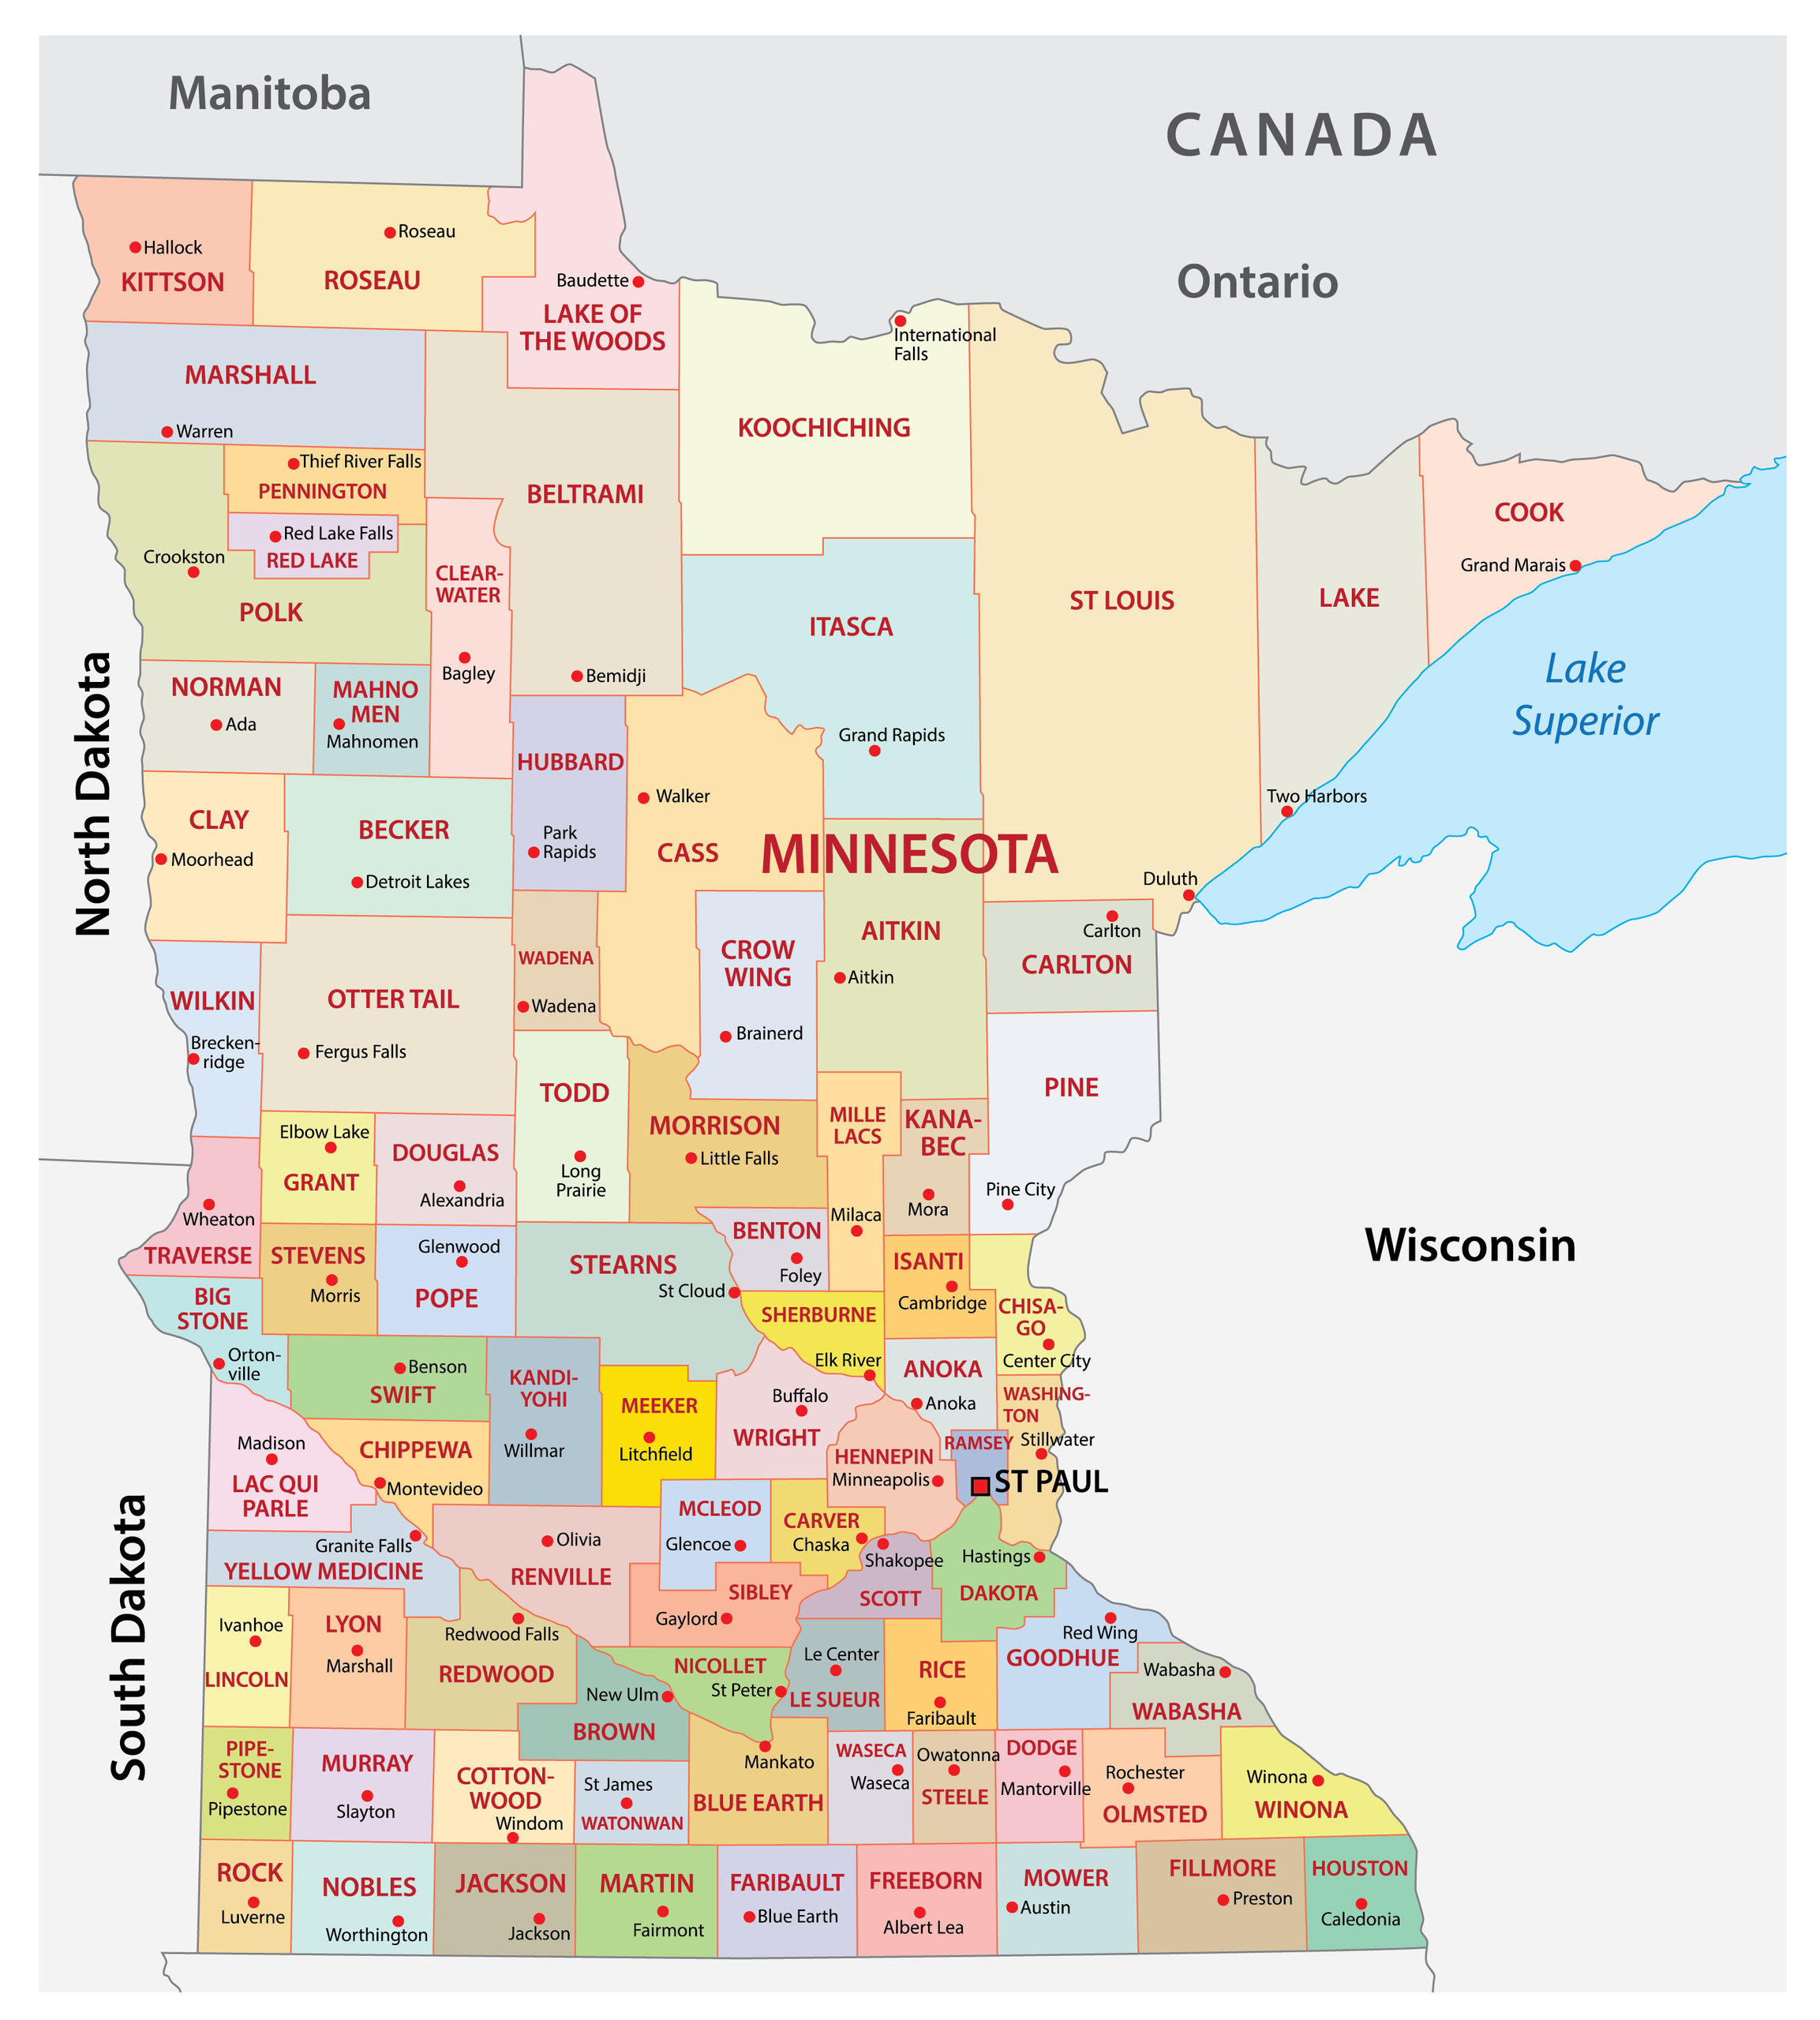 Minnesota by counties.